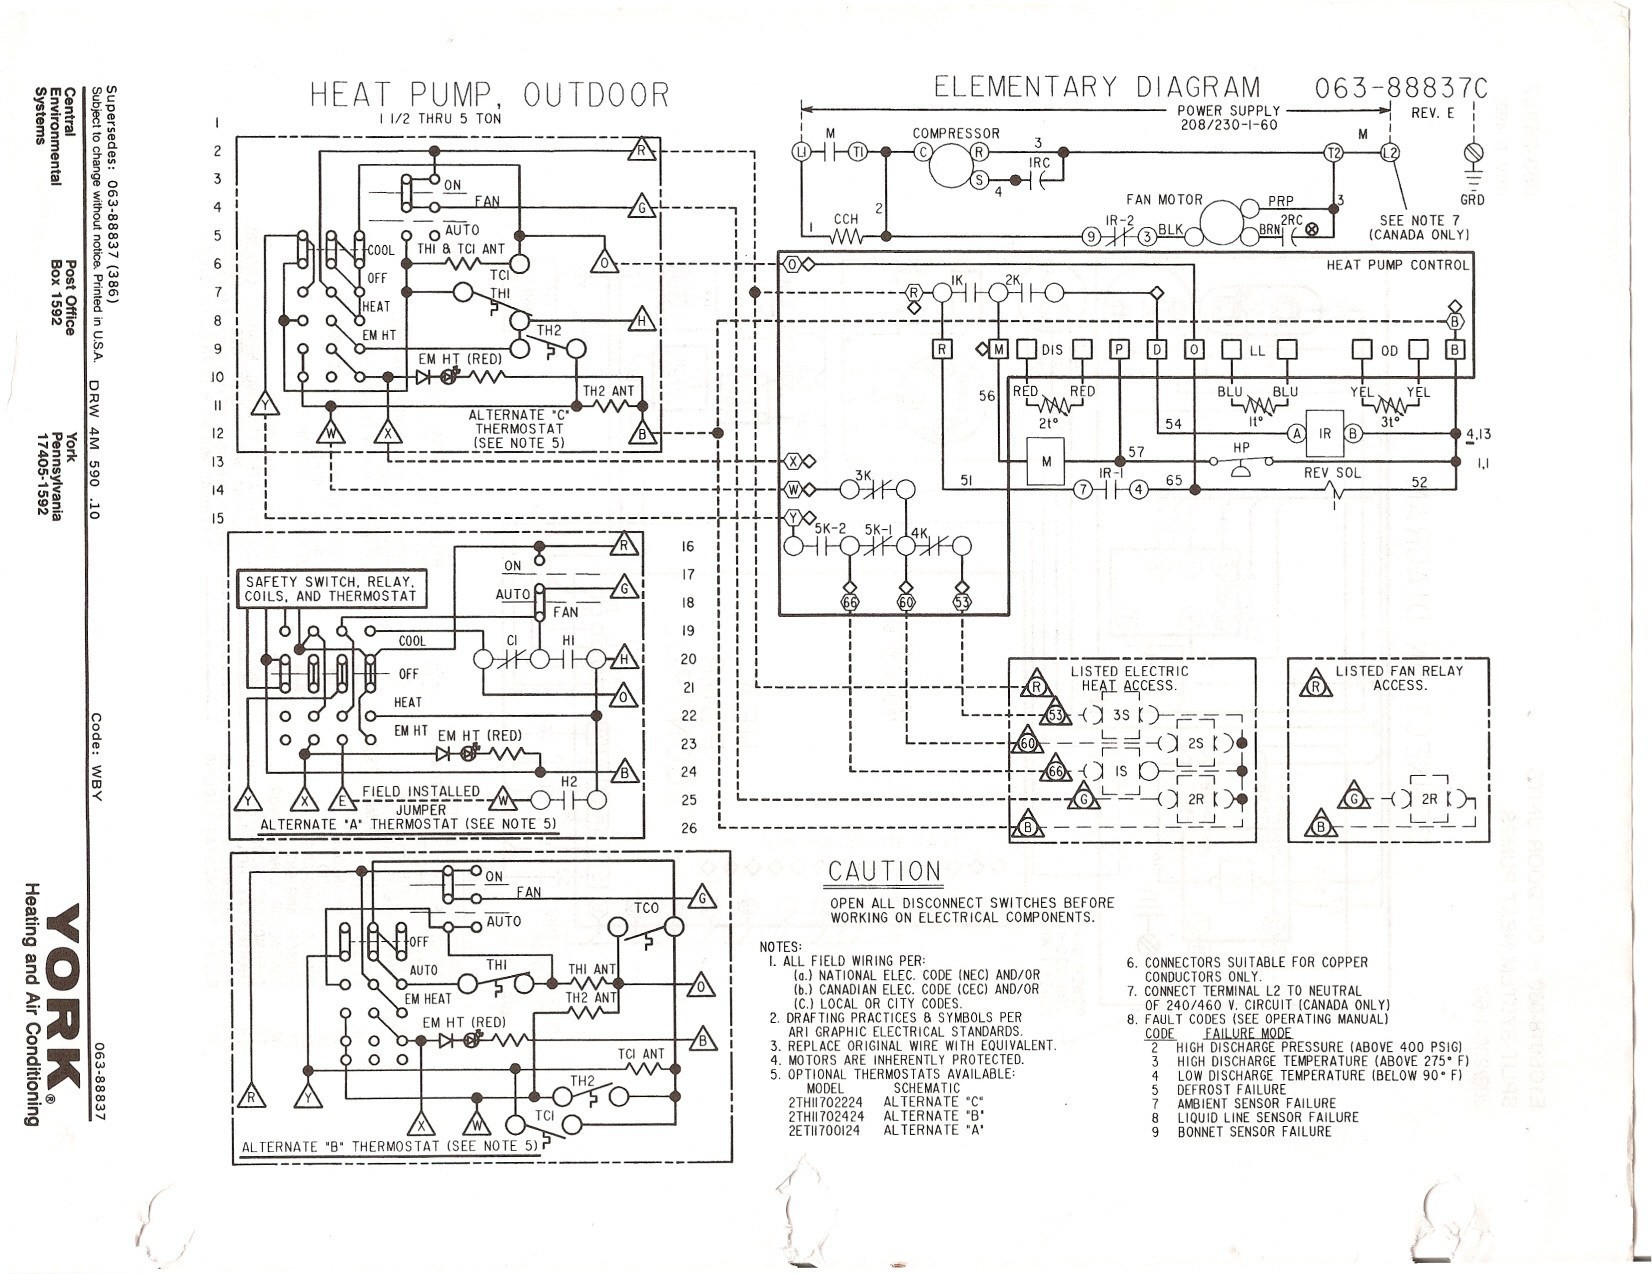 Wiring Diagram for Goodman Ac Unit Save Ac Package Unit Wiring Diagram Free Download Wiring Diagram